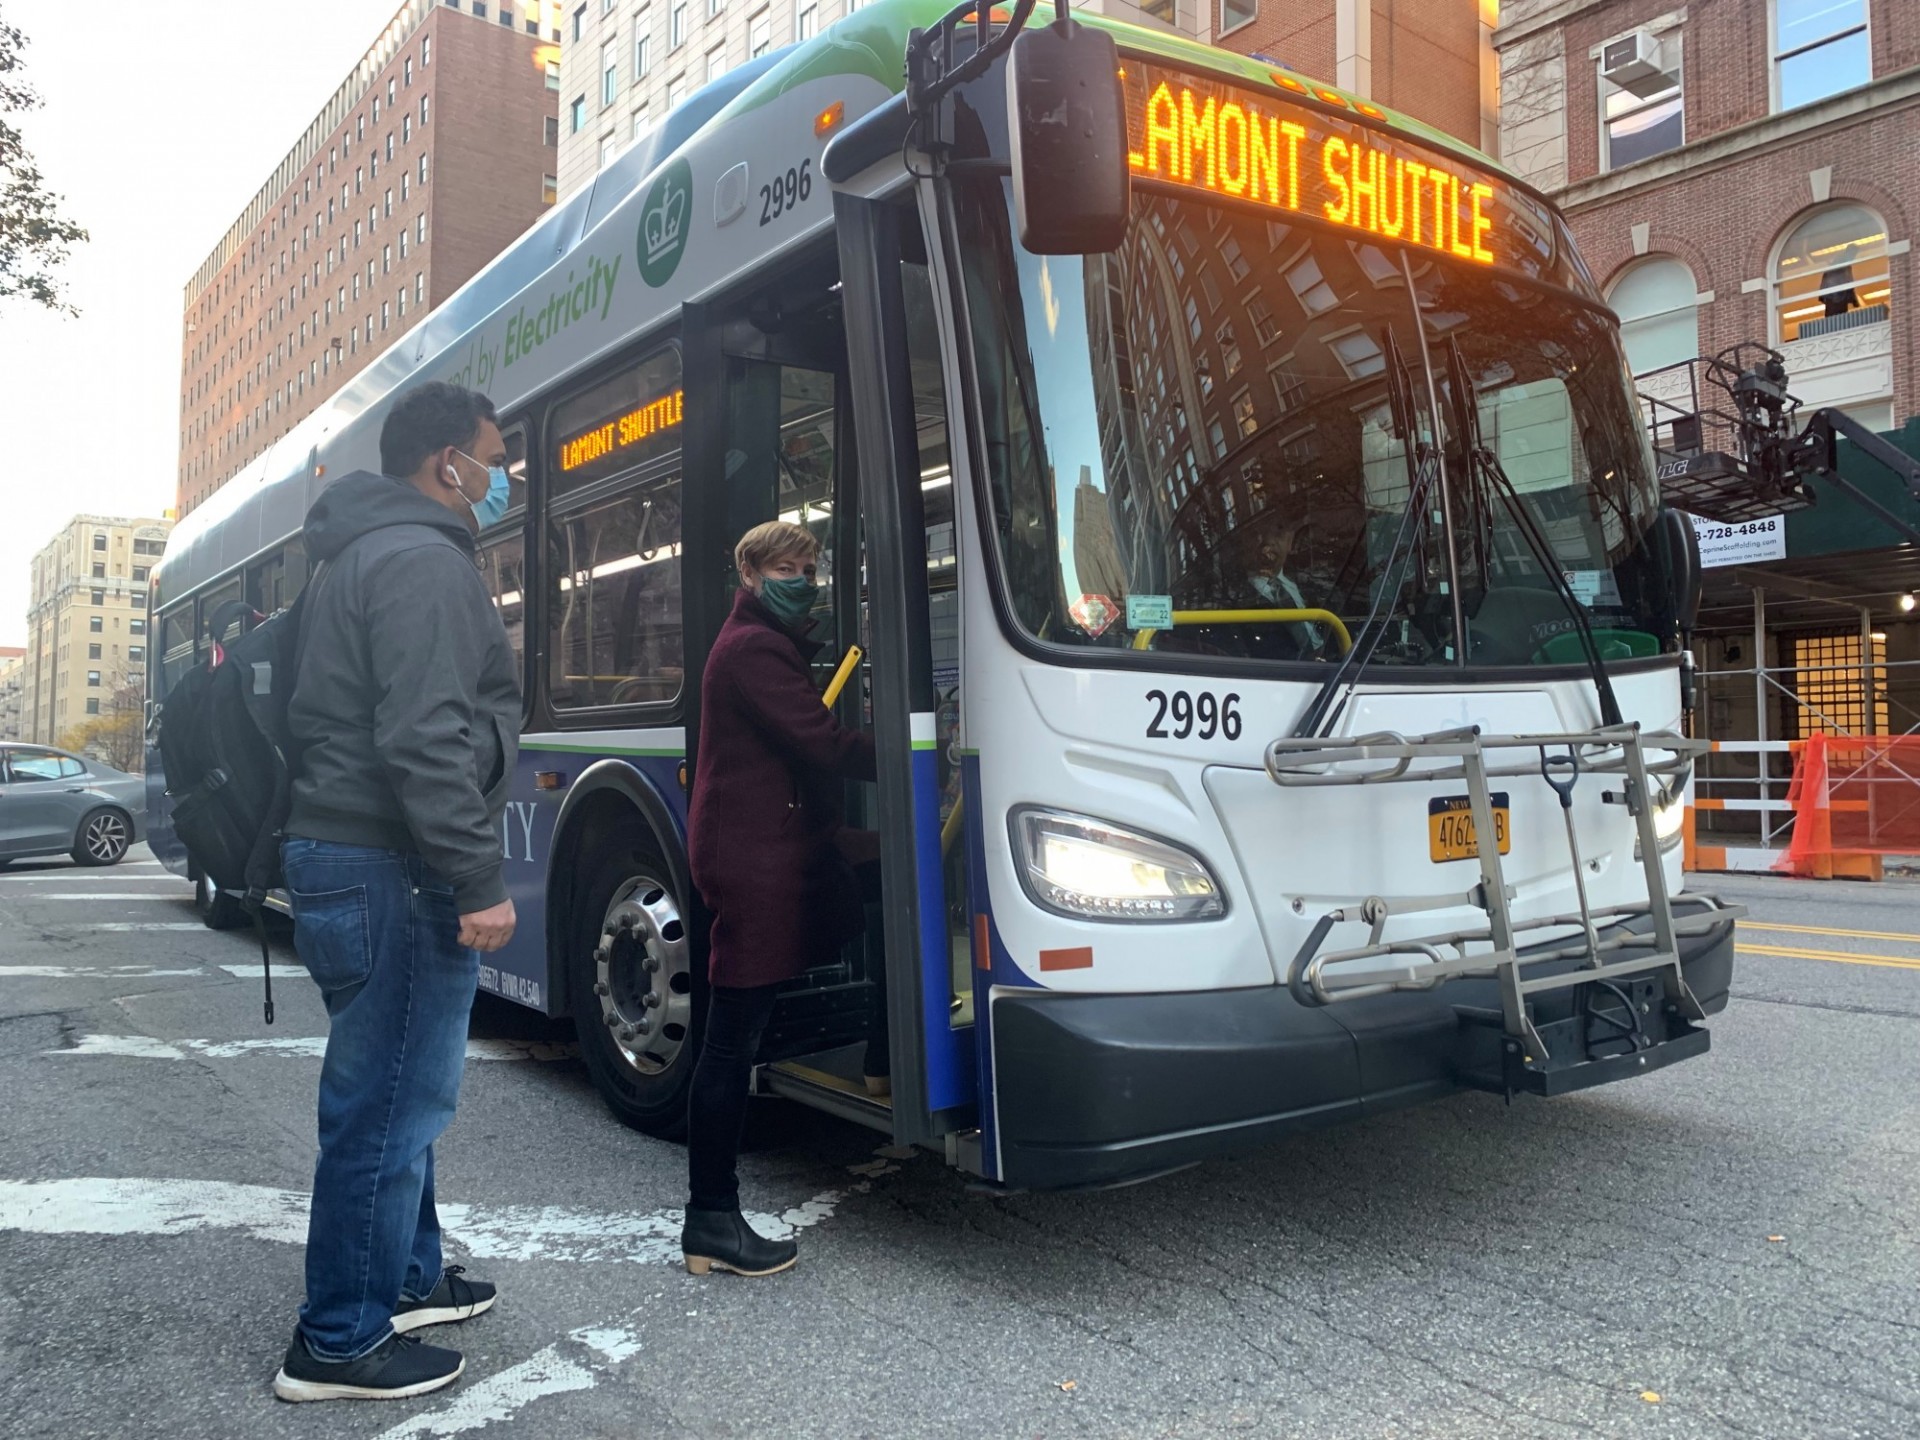 Passengers board the Lamont shuttle outside Teachers College on 120th Street in Manhattan